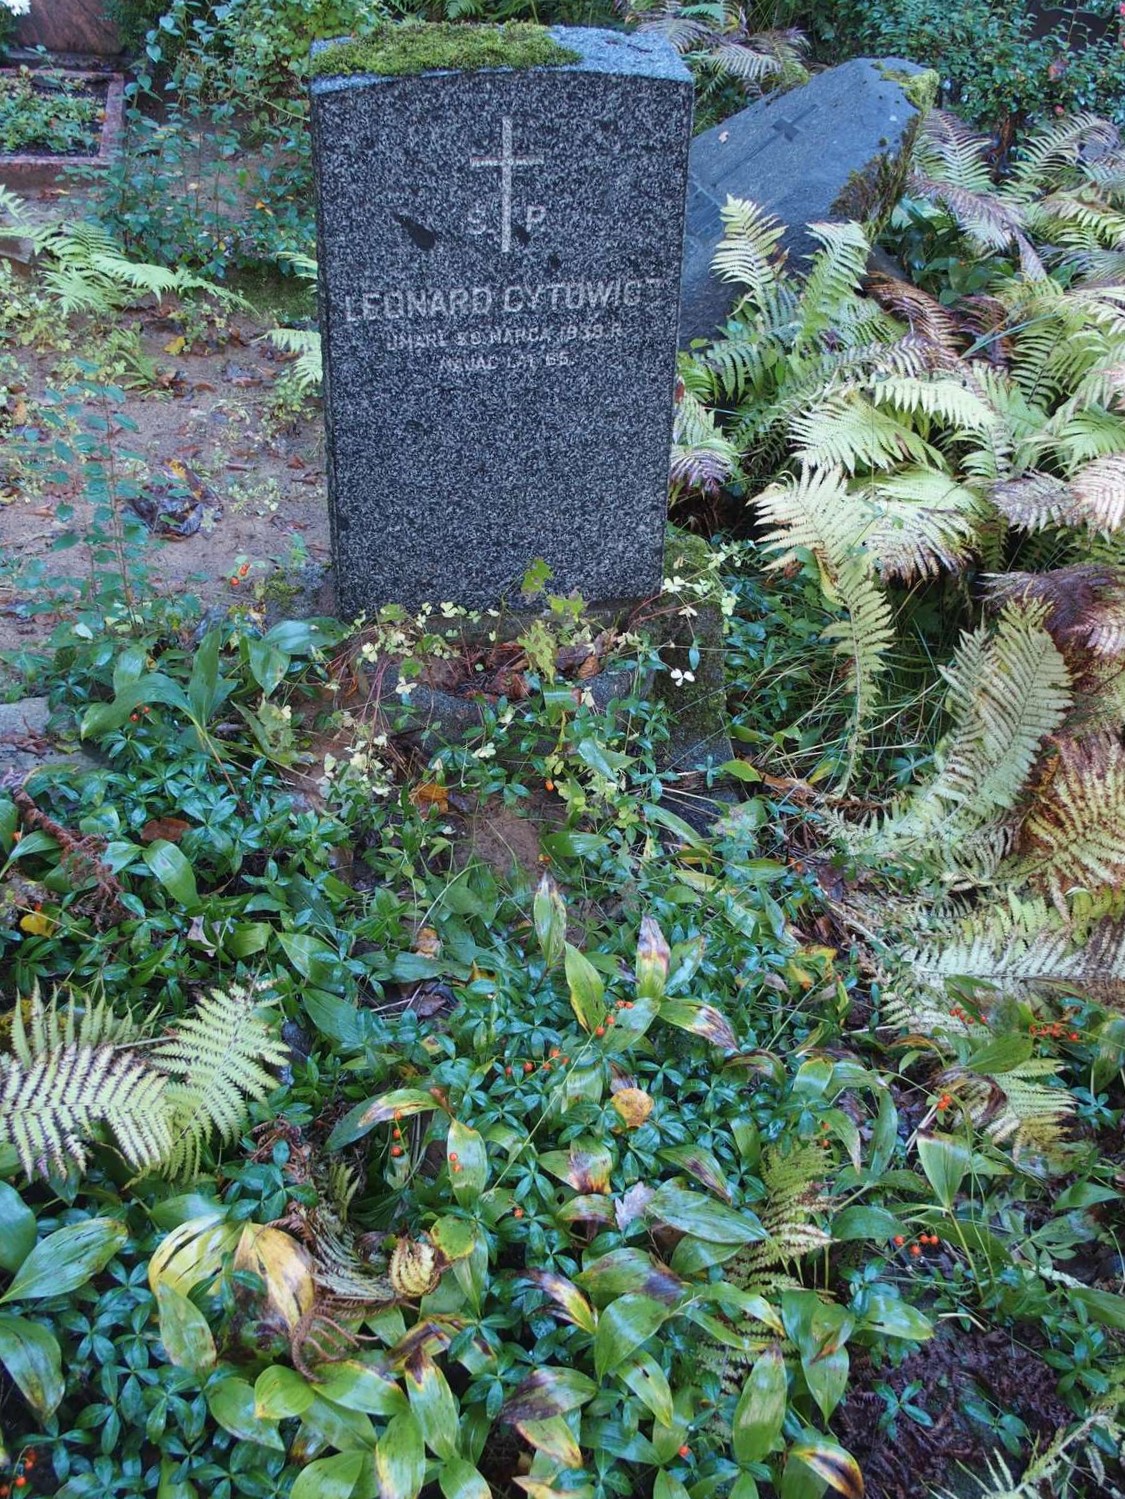 Tombstone of Leonard Cytowicz